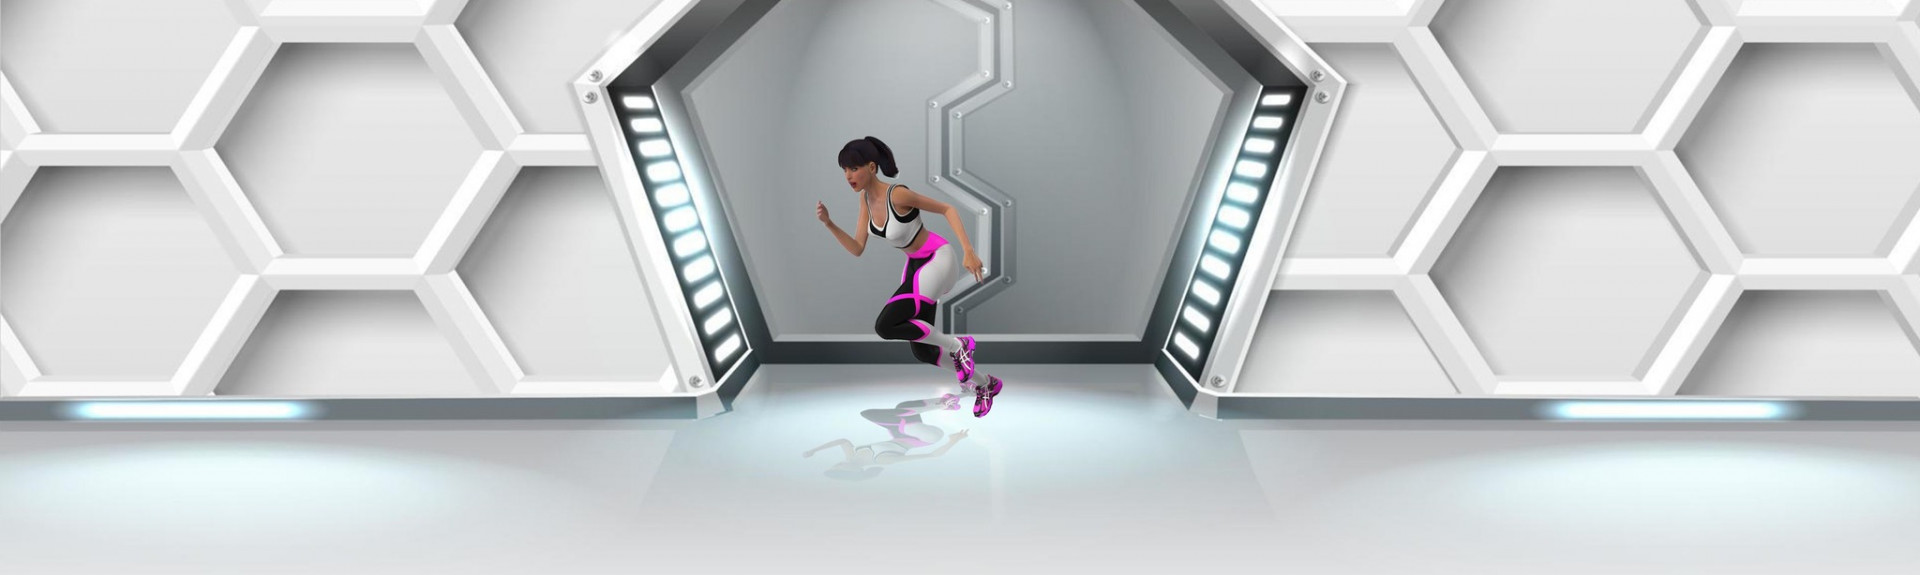 Hyper Run - VR Fitness Games 3D : SciFi Race Game